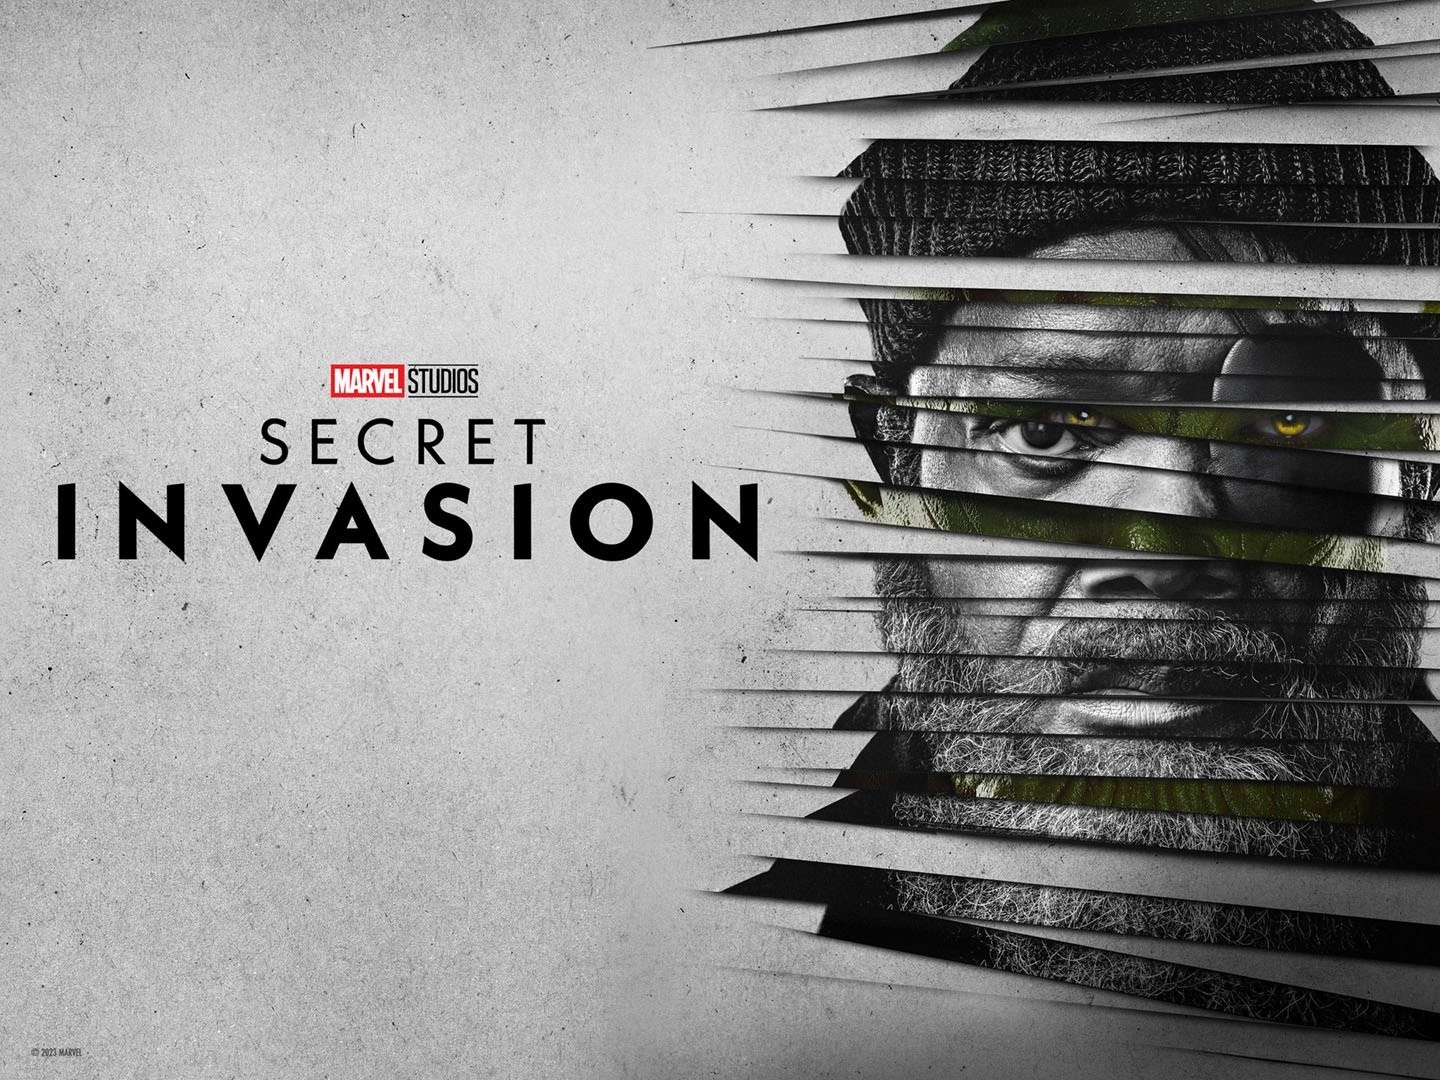 Marvel Studios' Secret Invasion - Official Trailer 